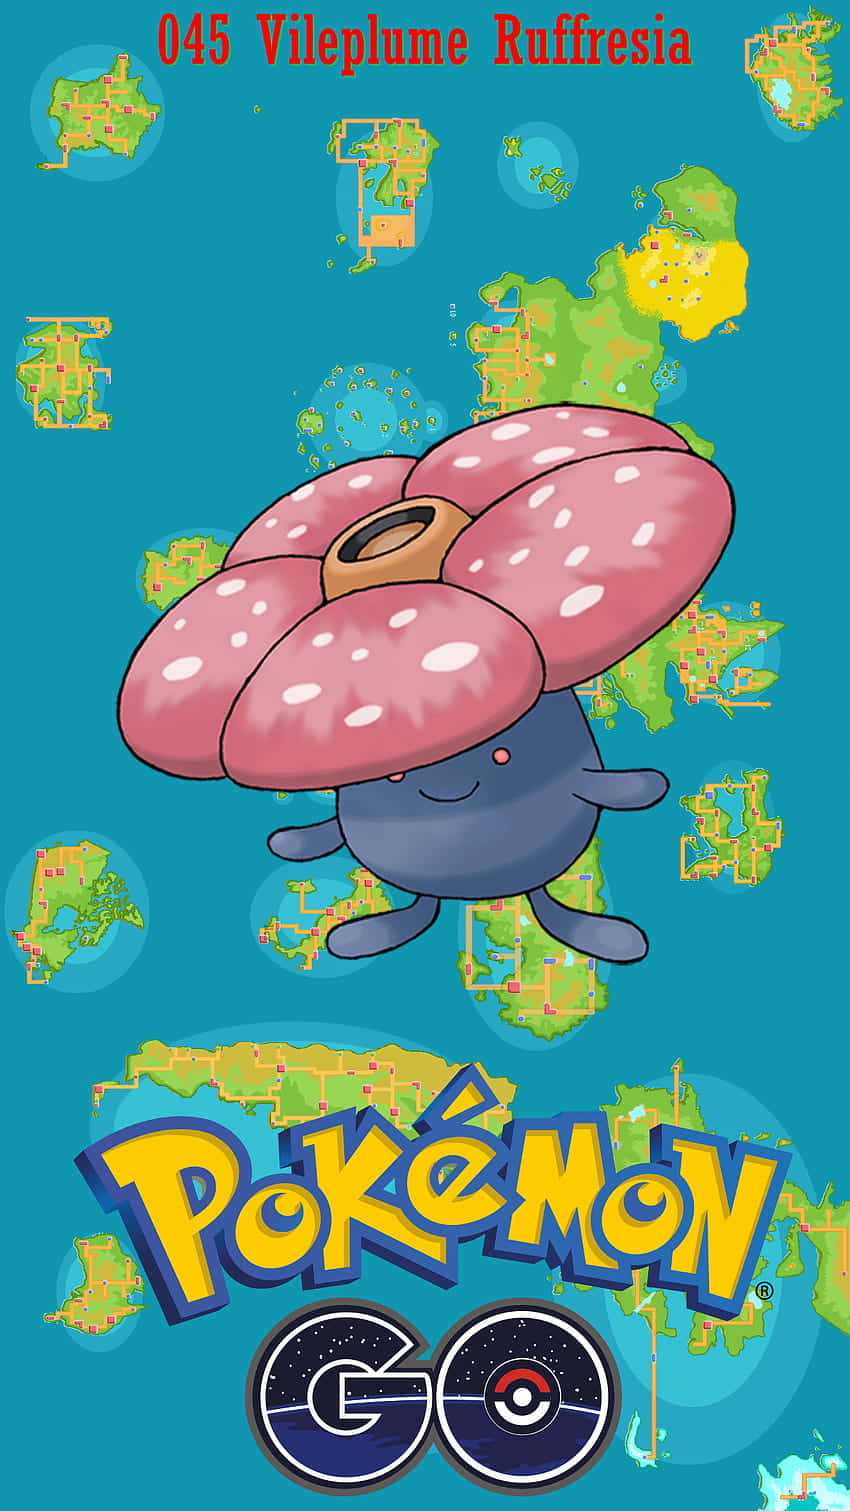 Pokemon Go Card With Vileplume Ruffresia Wallpaper